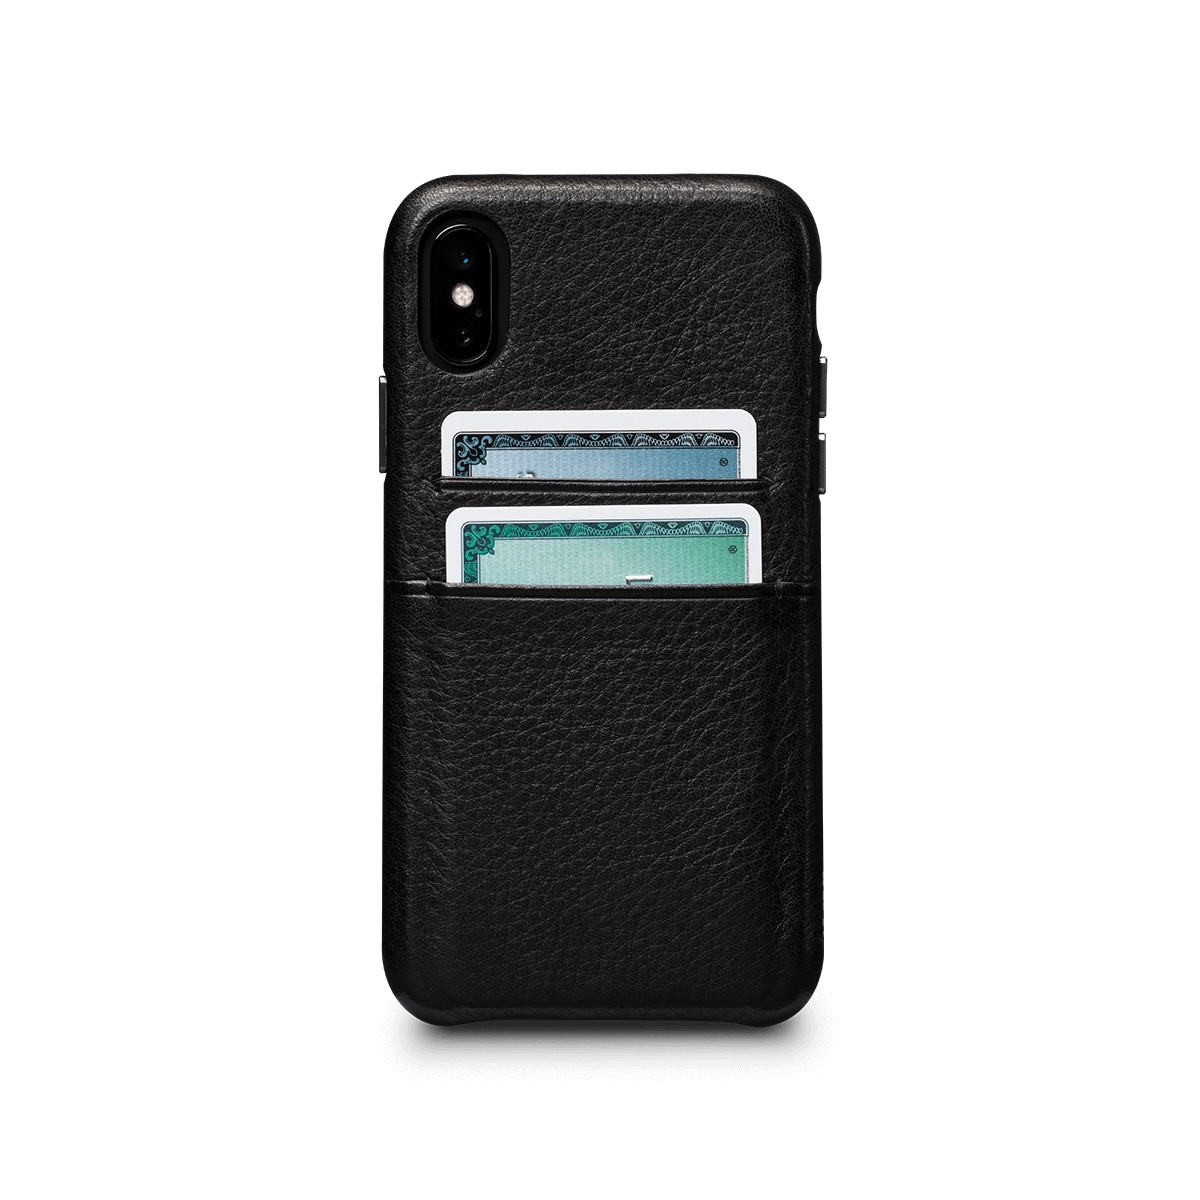 Coque iPhone Xs / iPhone X en cuir véritable porte-cartes noir - Sena Cases